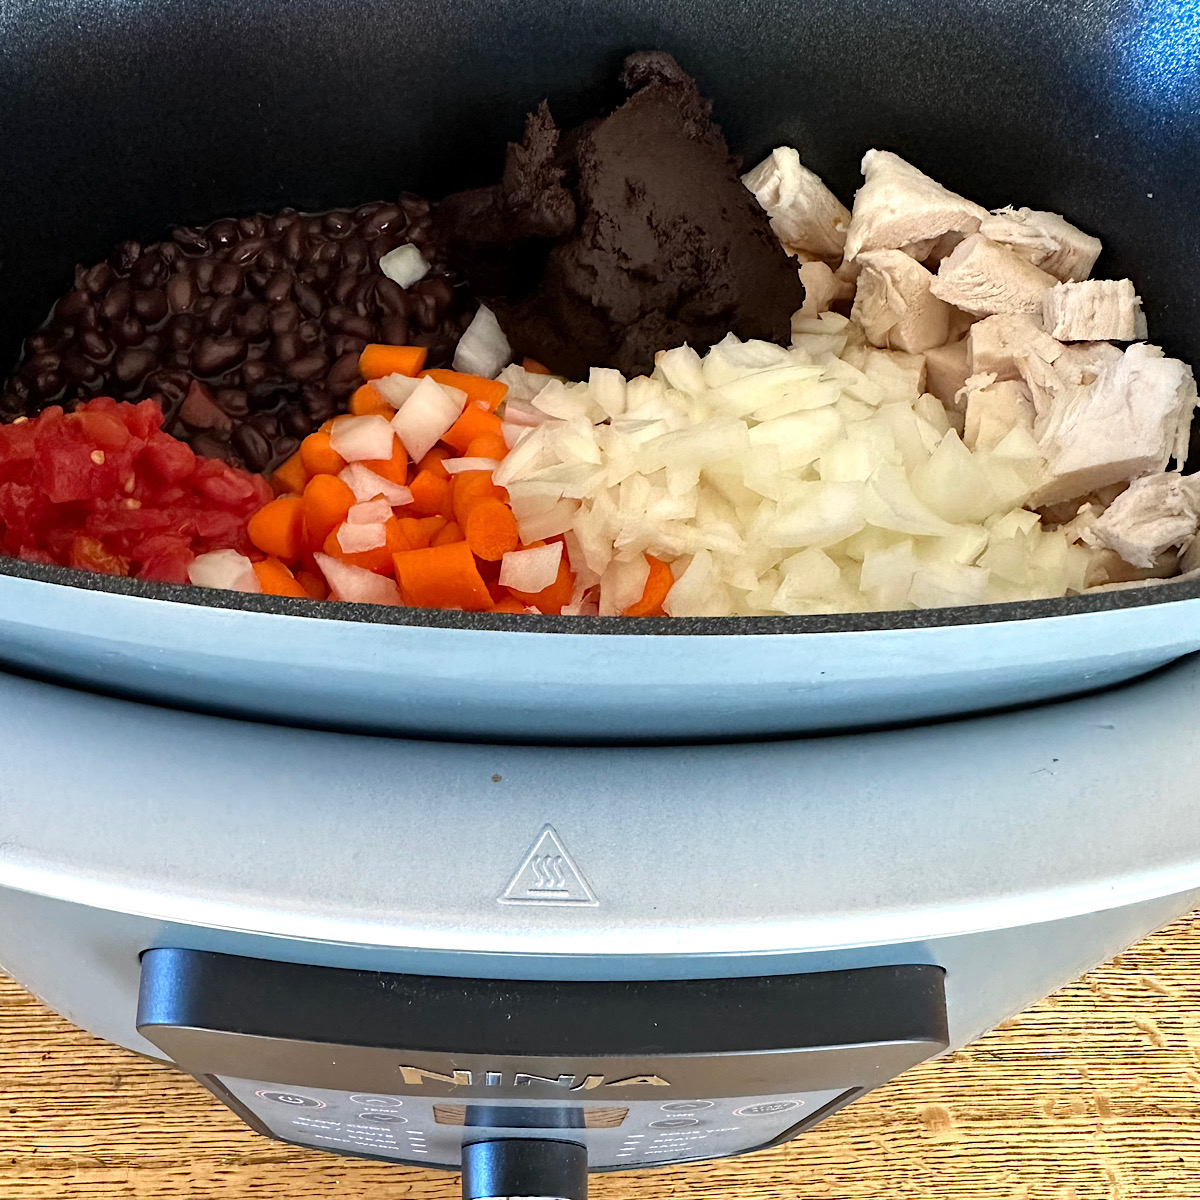 Turkey mole chili ingredient in a crockpot.